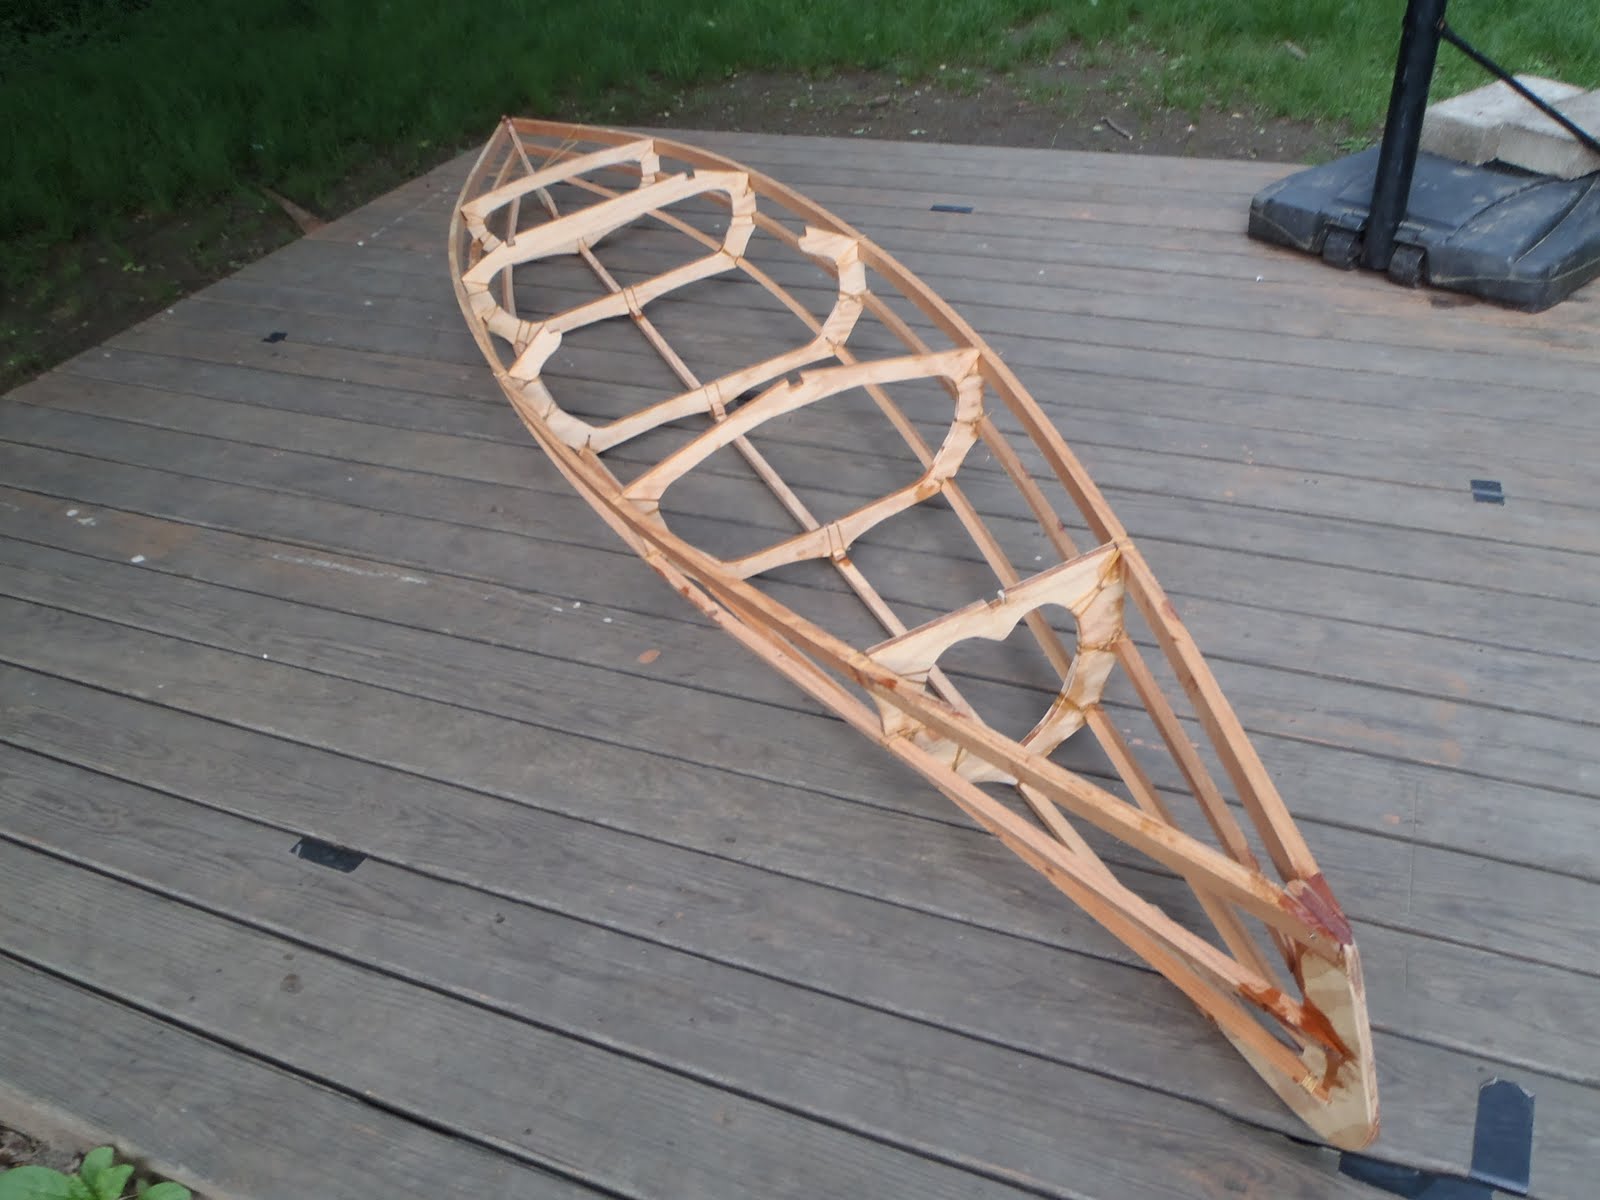 Michals-Brown Adventures: Building a Chuckanut 12 skin-on-frame kayak